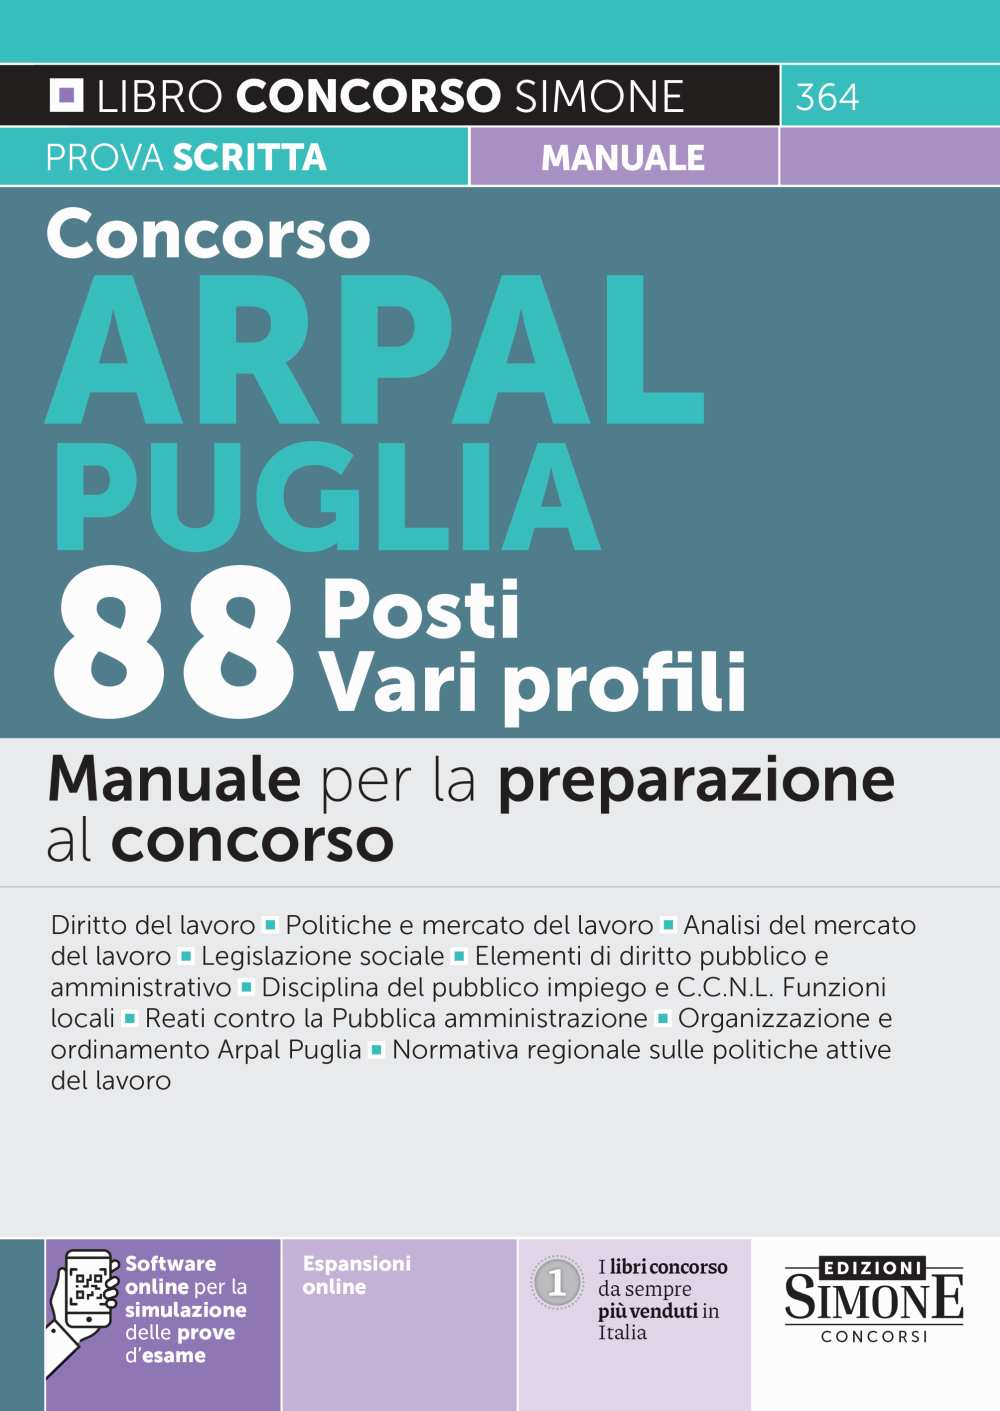 Concorso Arpal Puglia 88 Posti Vari profili - Manuale - 364